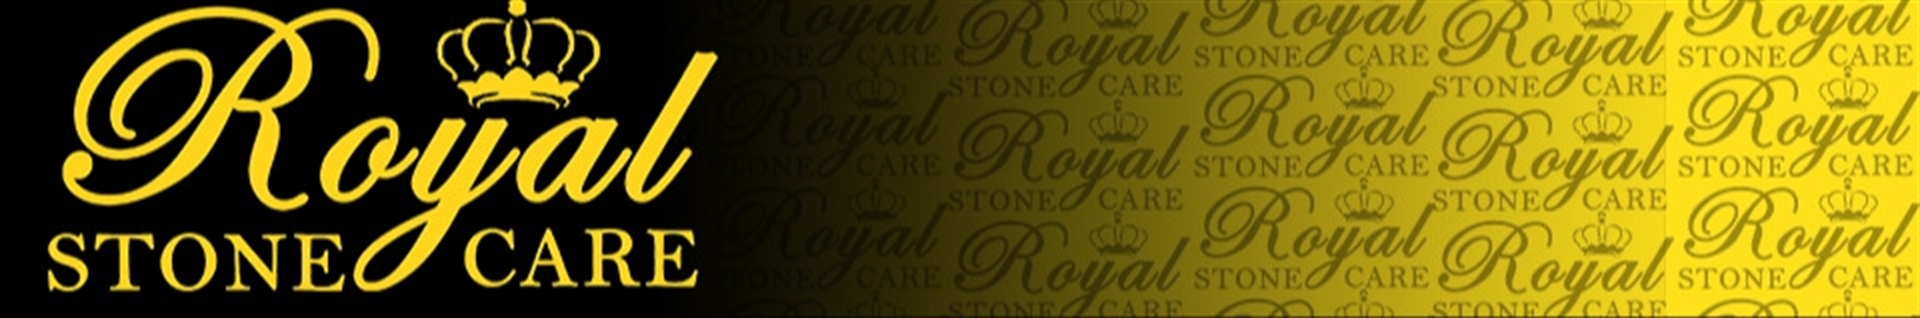 Royalstonecare